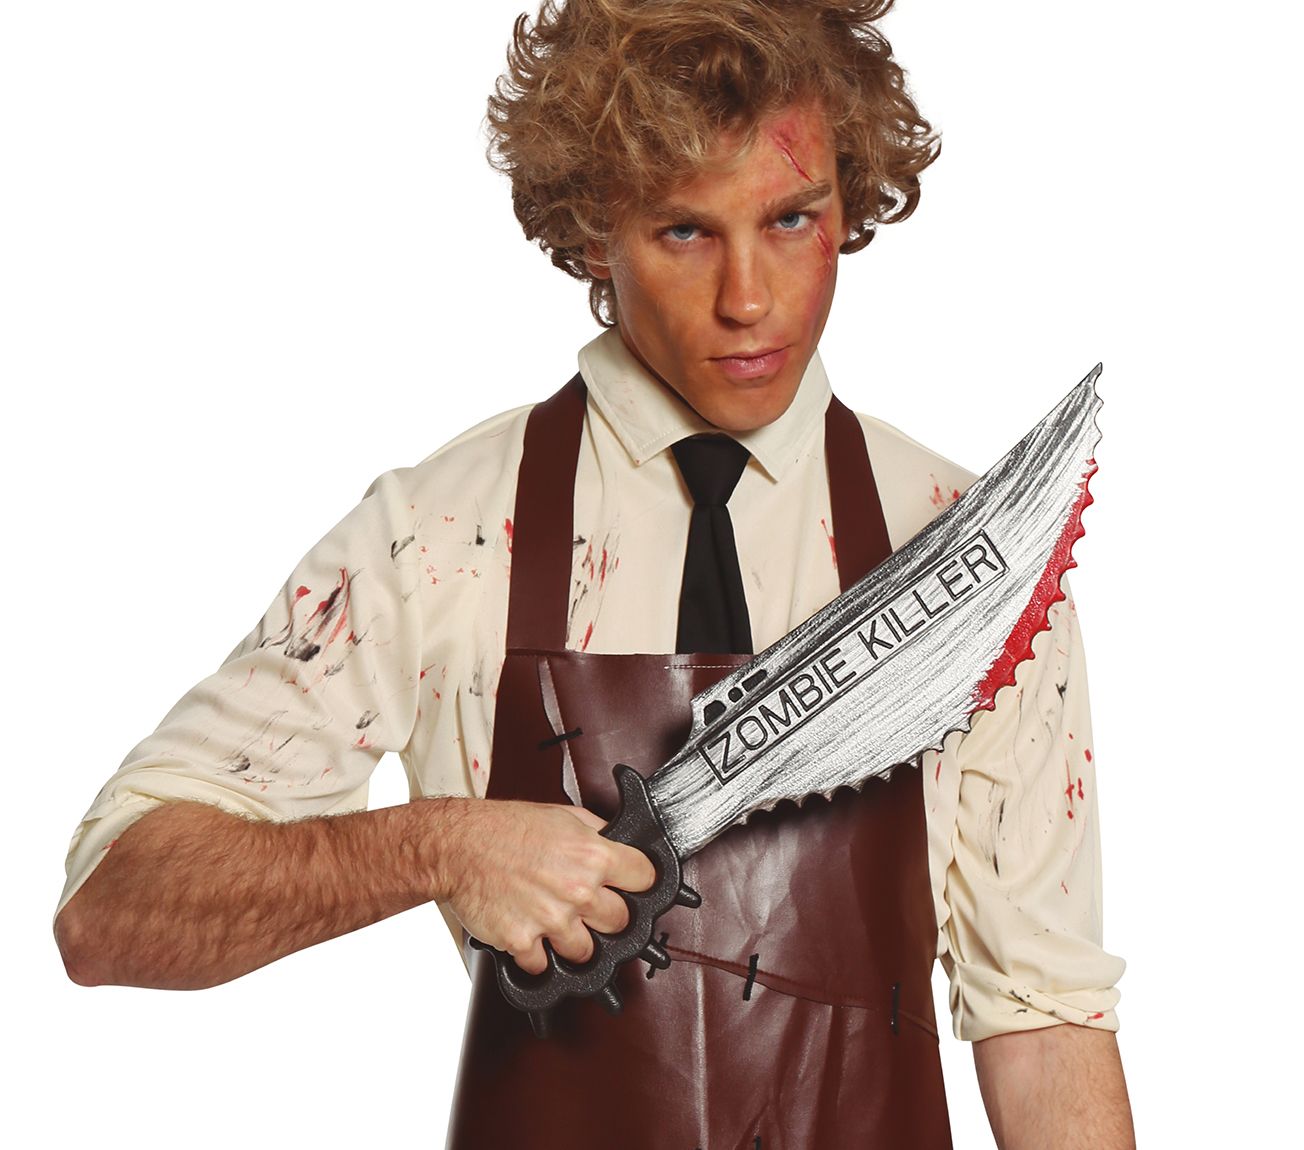 Bloederig zombie killer mes